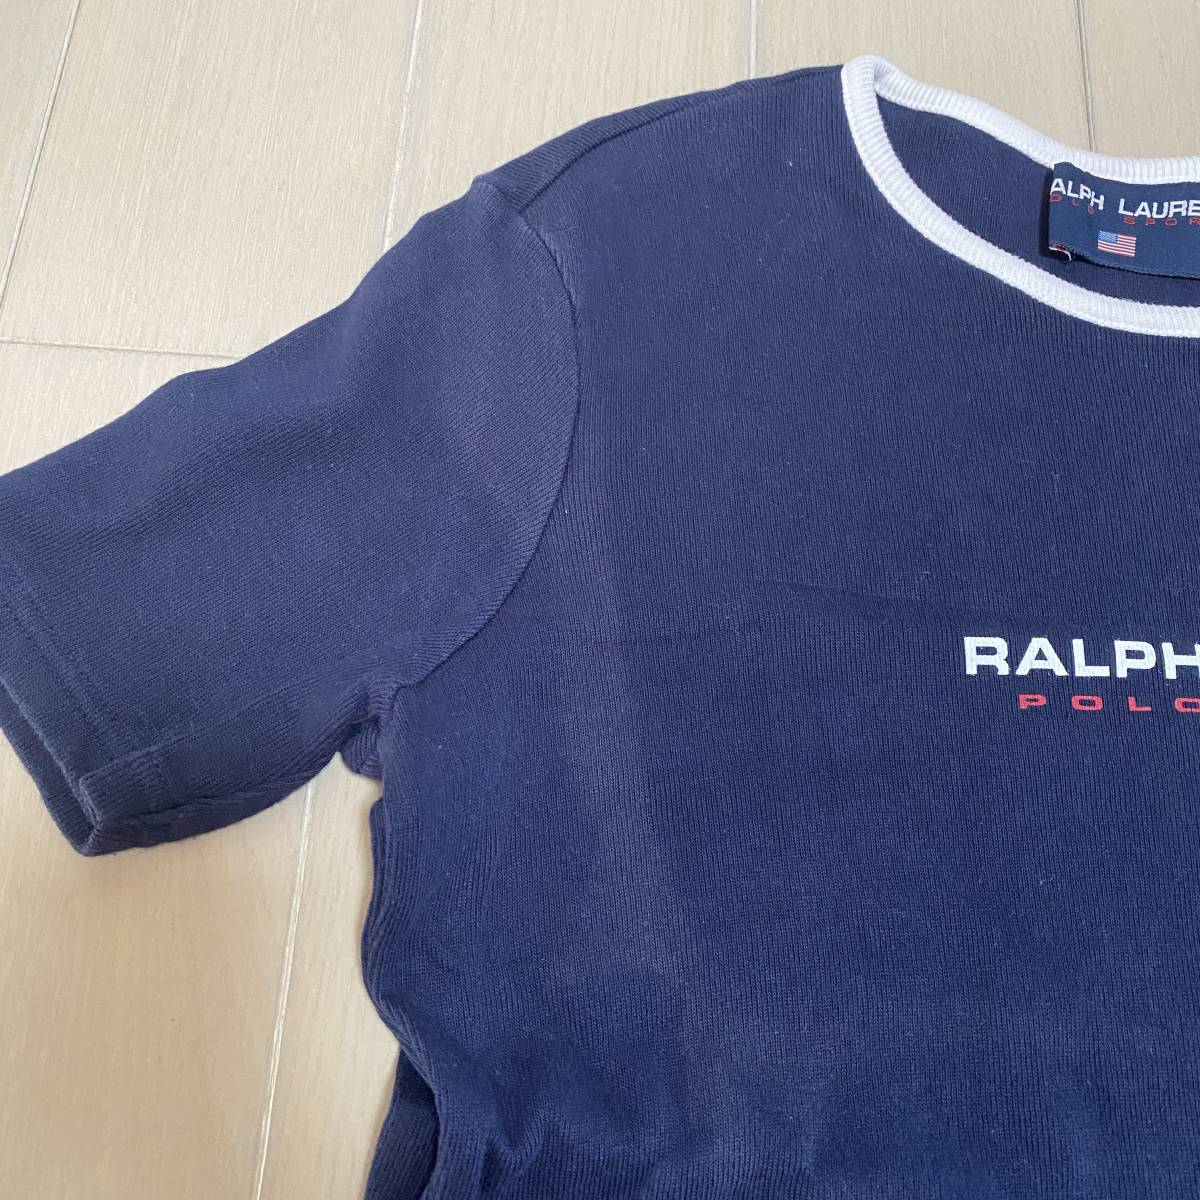  Ralph Lauren Vintage Polo спорт отделка футболка One-piece RALPH LAUREN POLO SPORT Old Ralf ..47